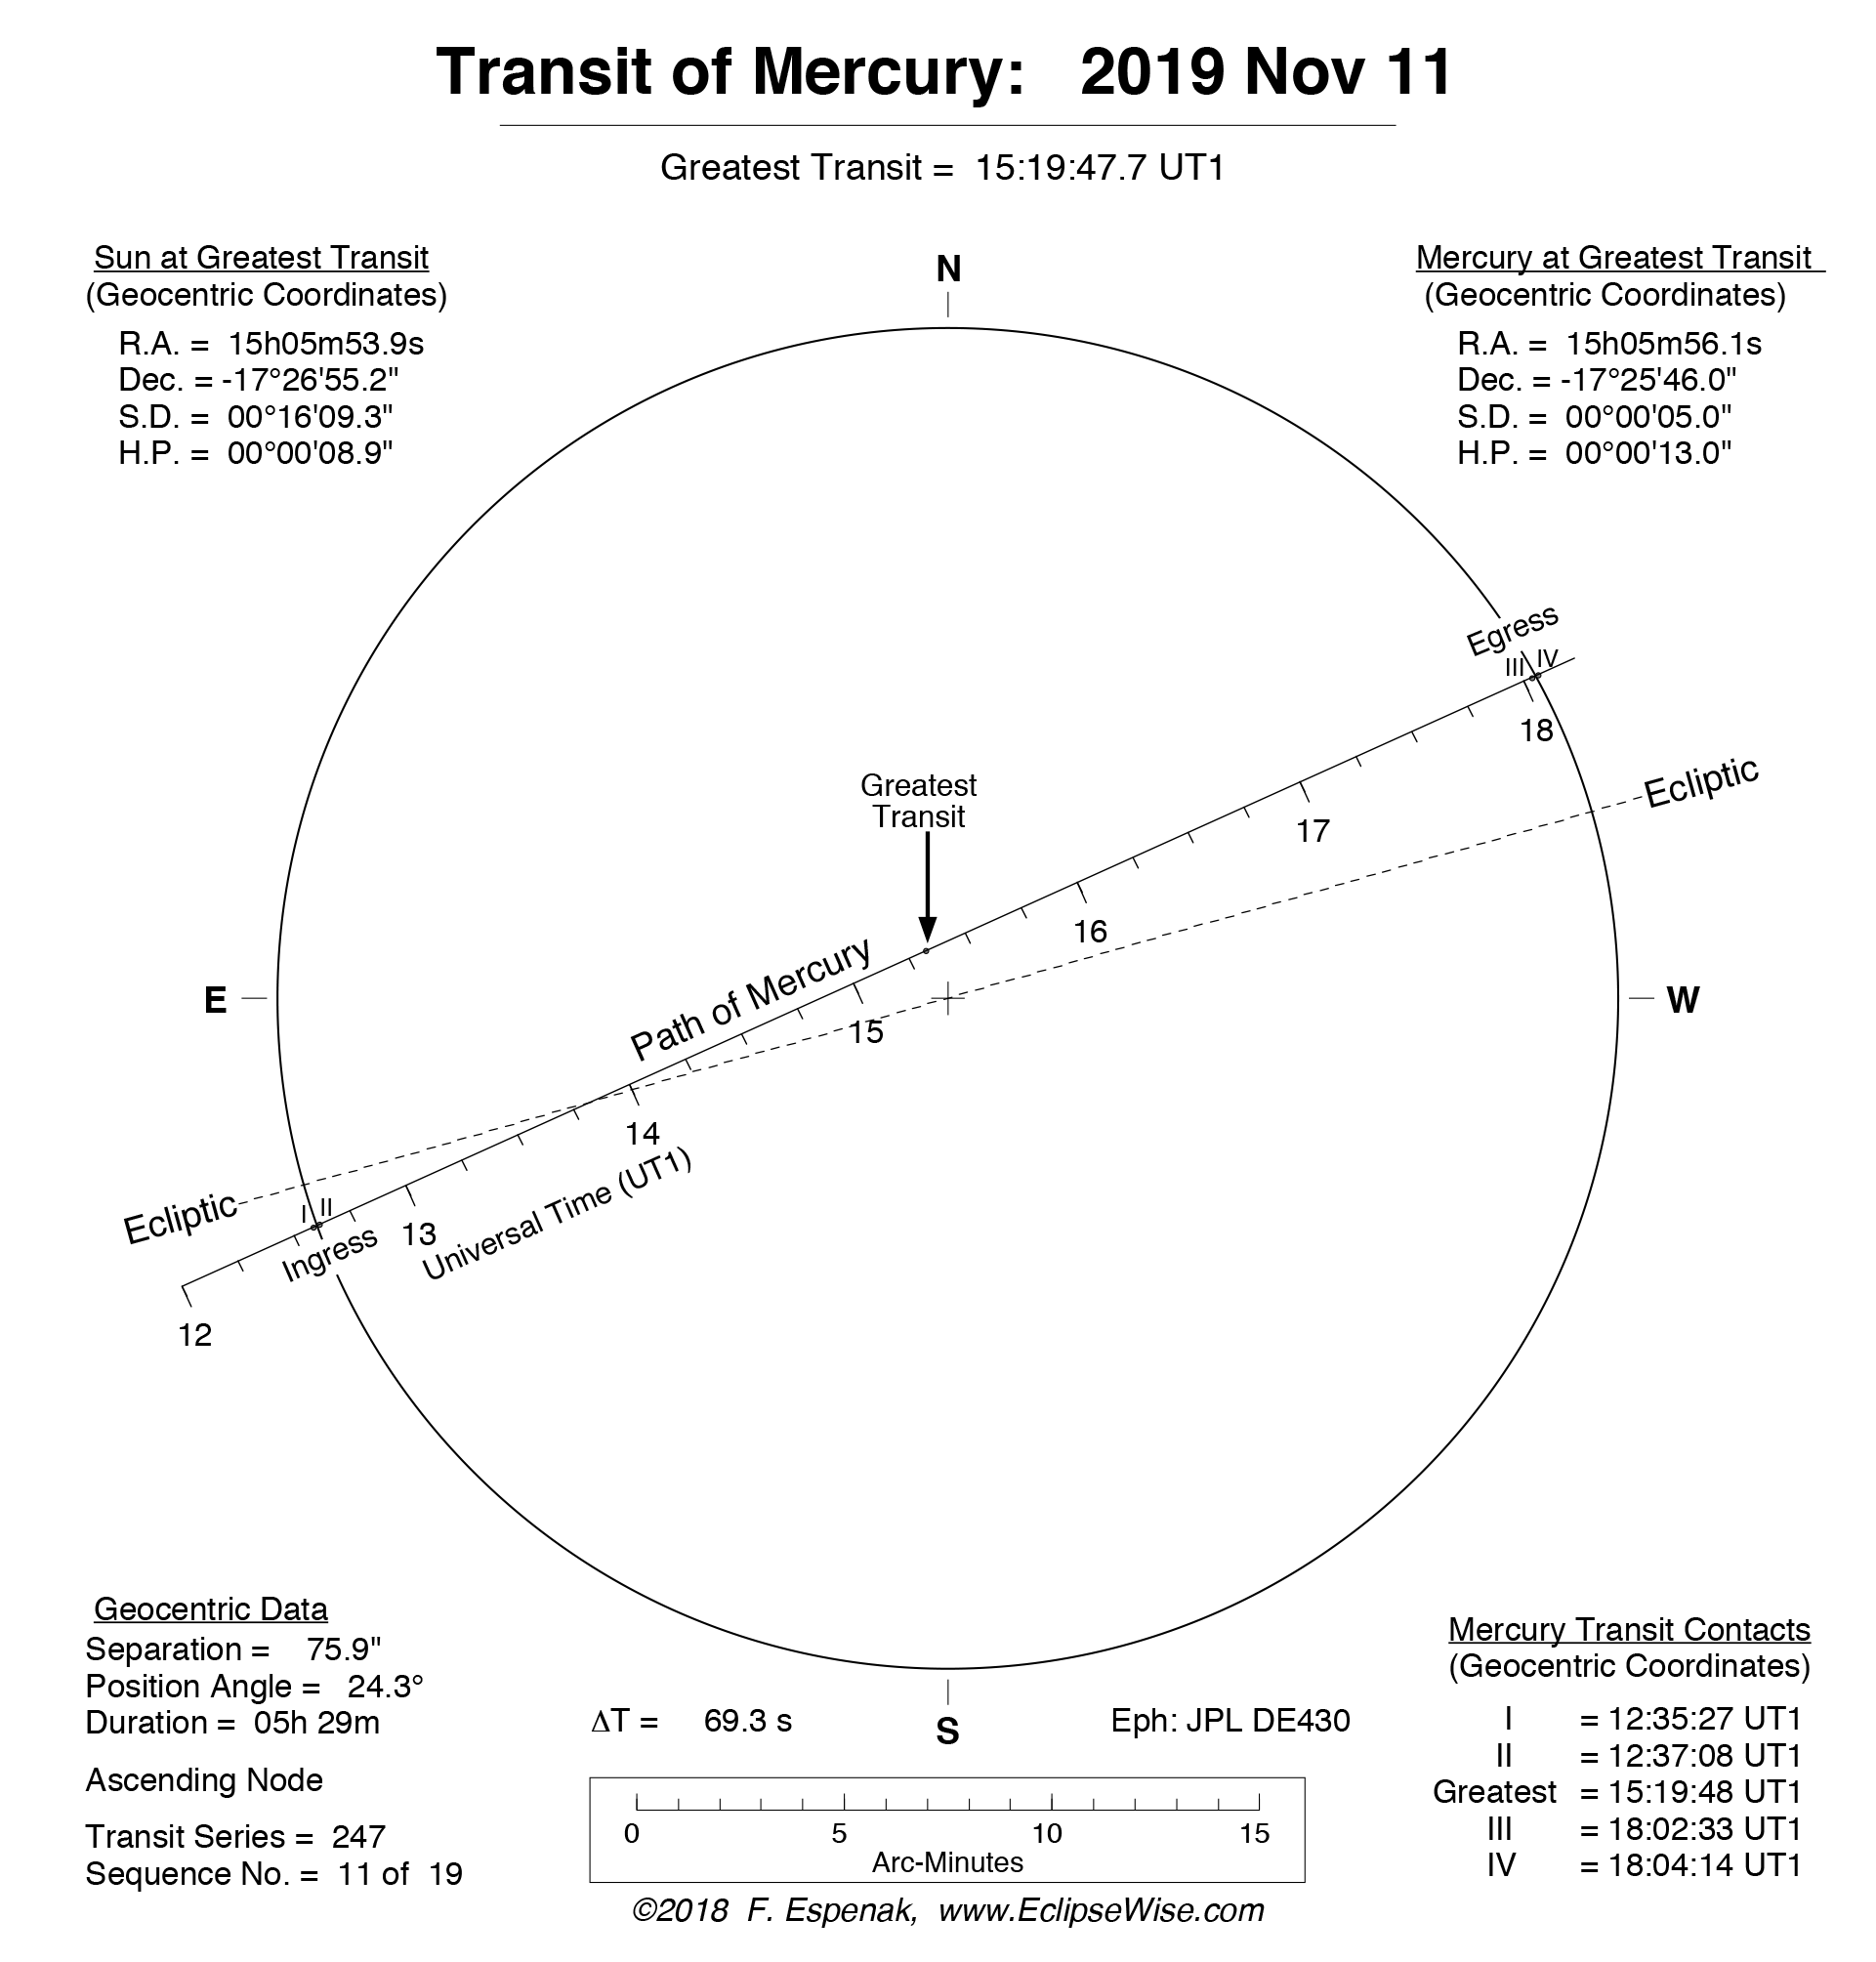 Transit of Mercury 2019